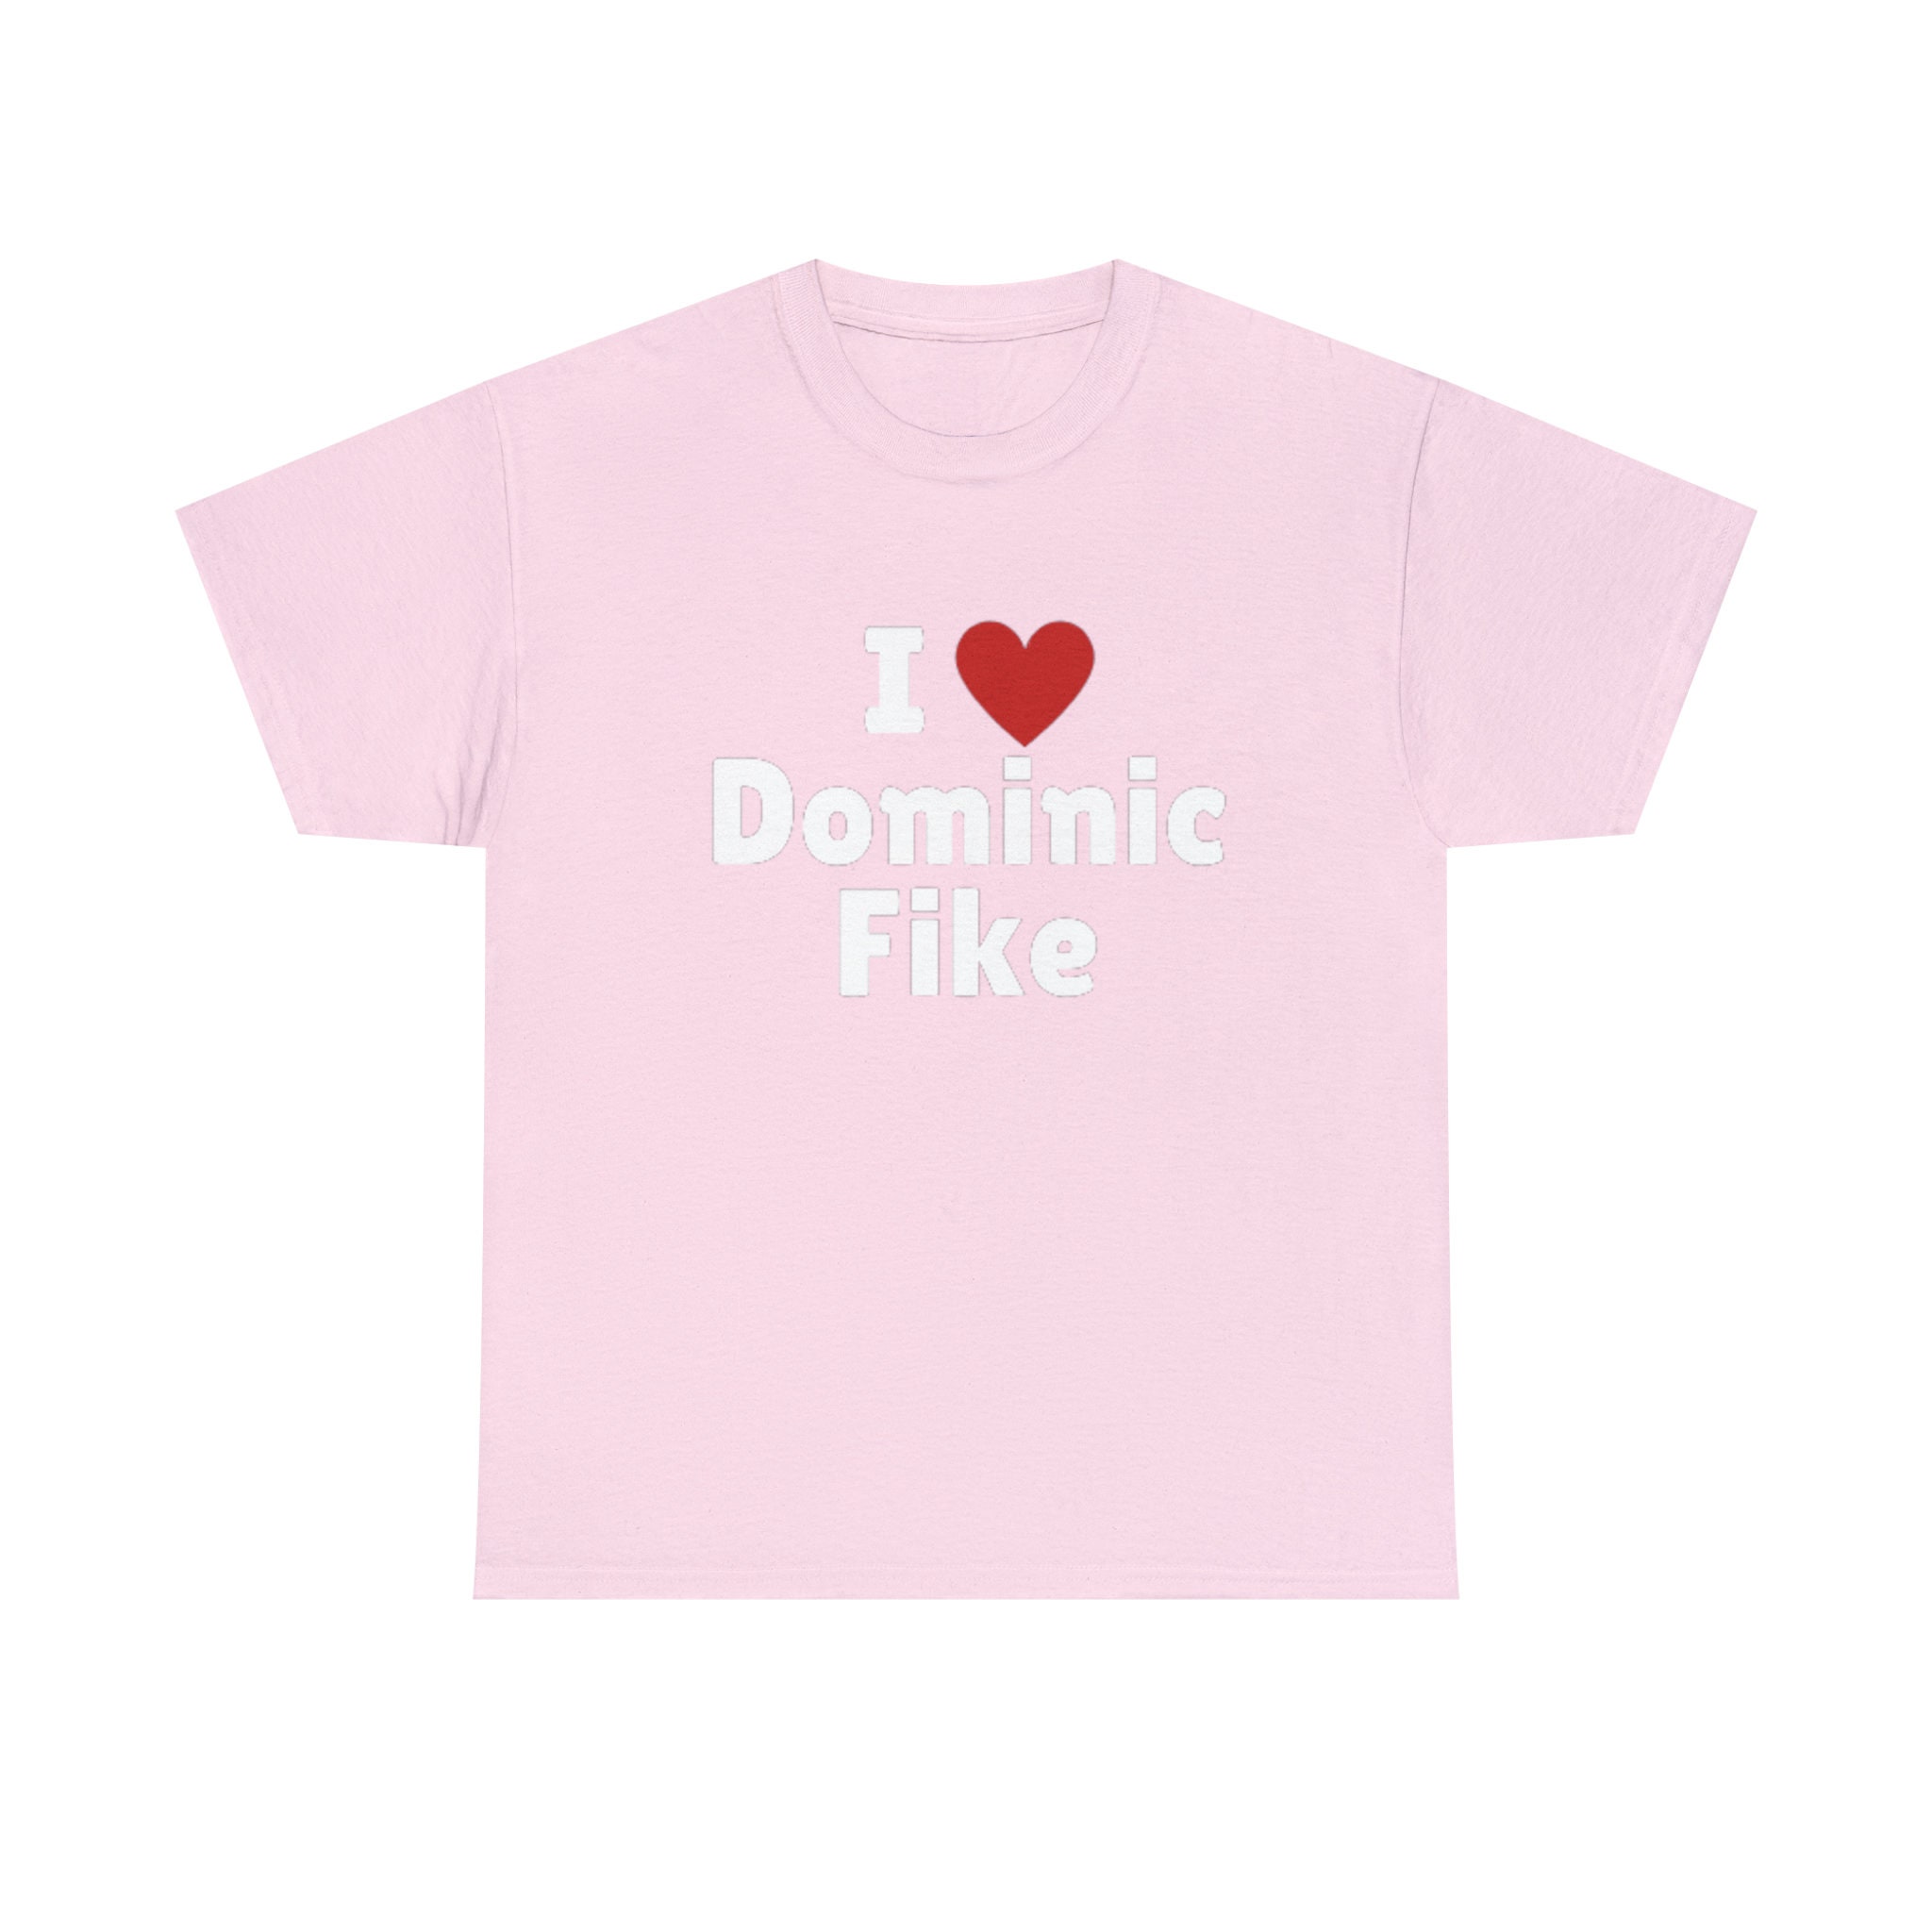 I Love Dominic Fike T-shirt I Heart Dominic Fike Tee Shirt 